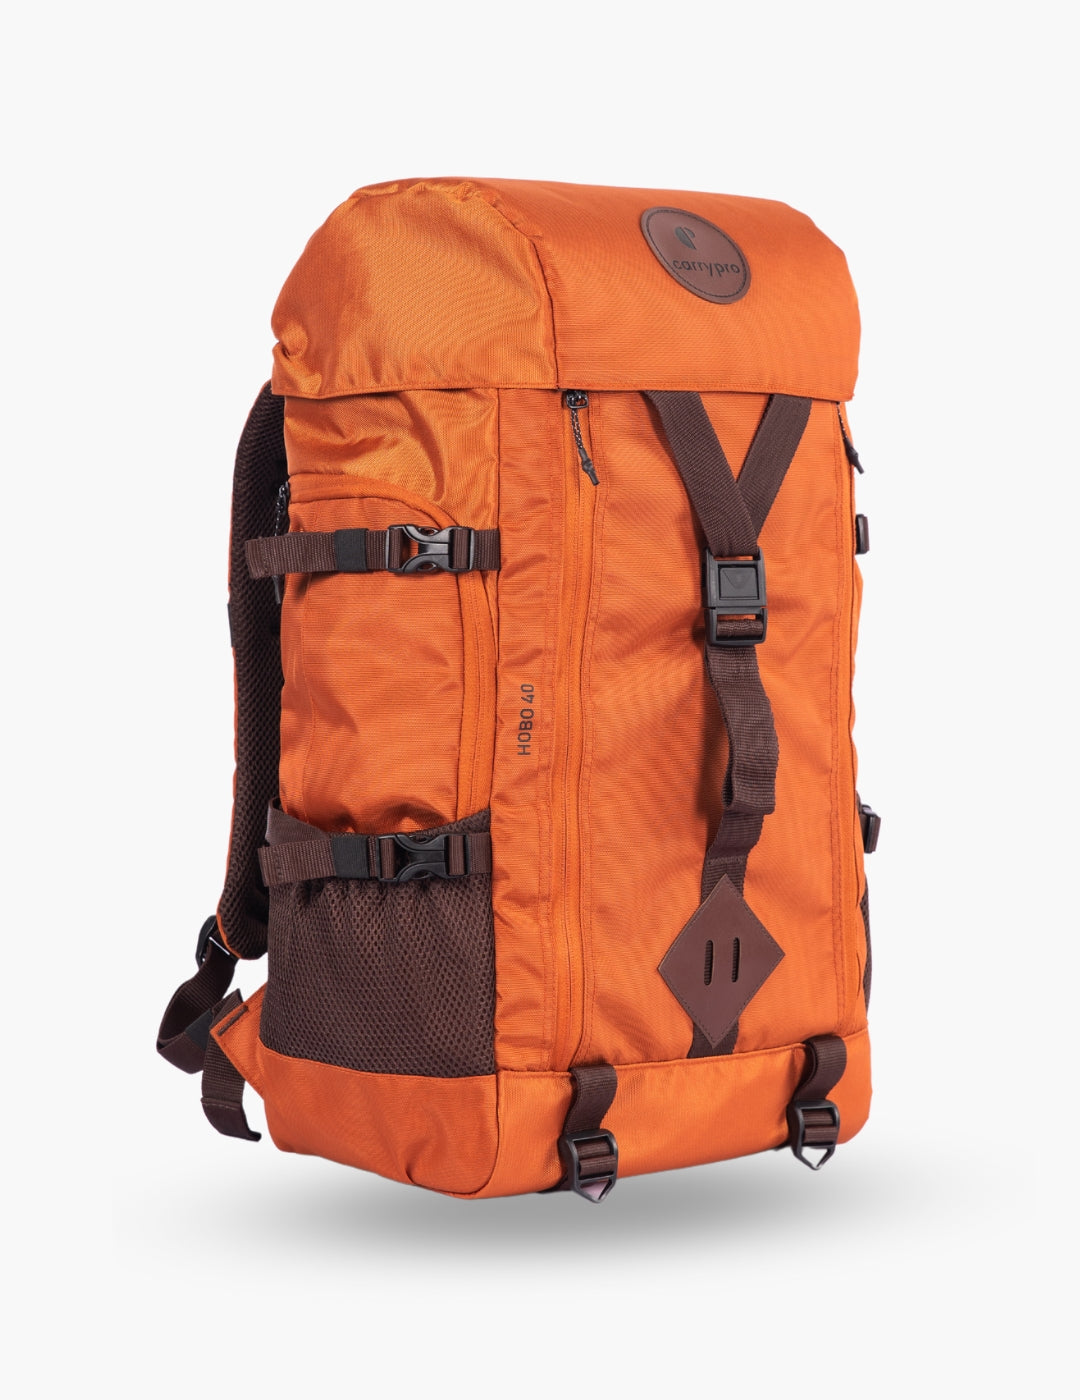 HOBO40 Functional Travel Backpack (40L)